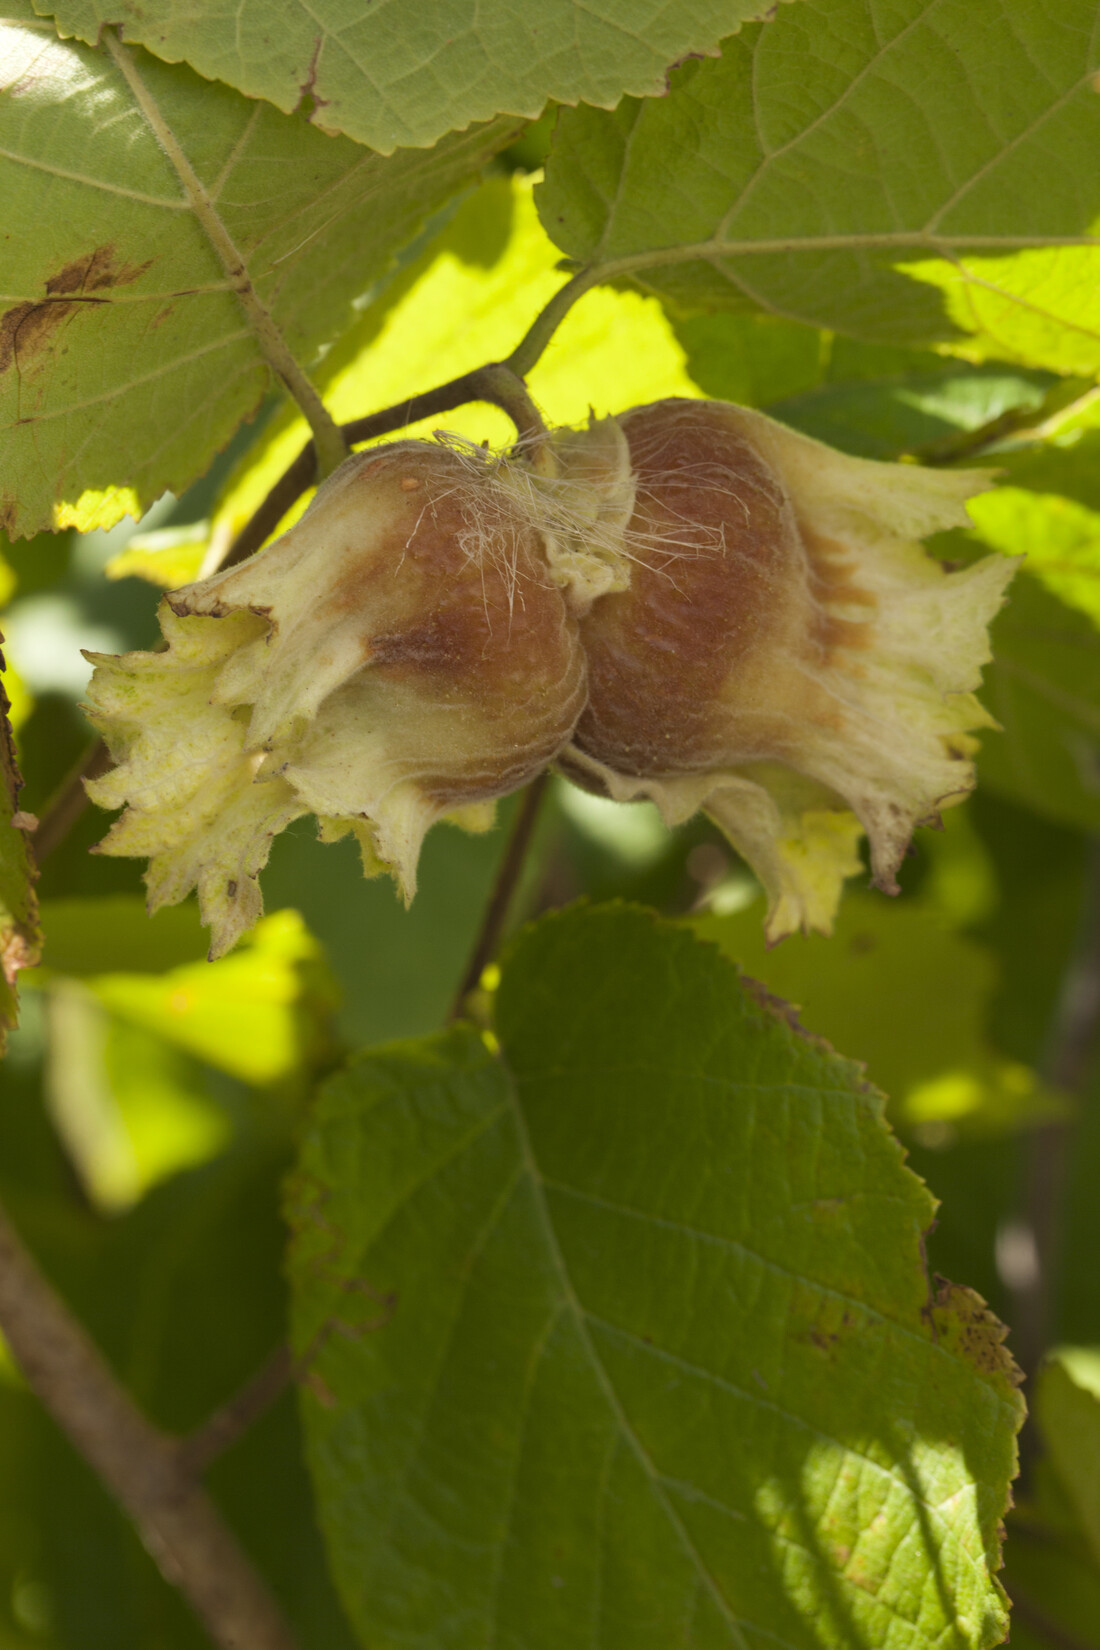 Hazelnuts on the vine